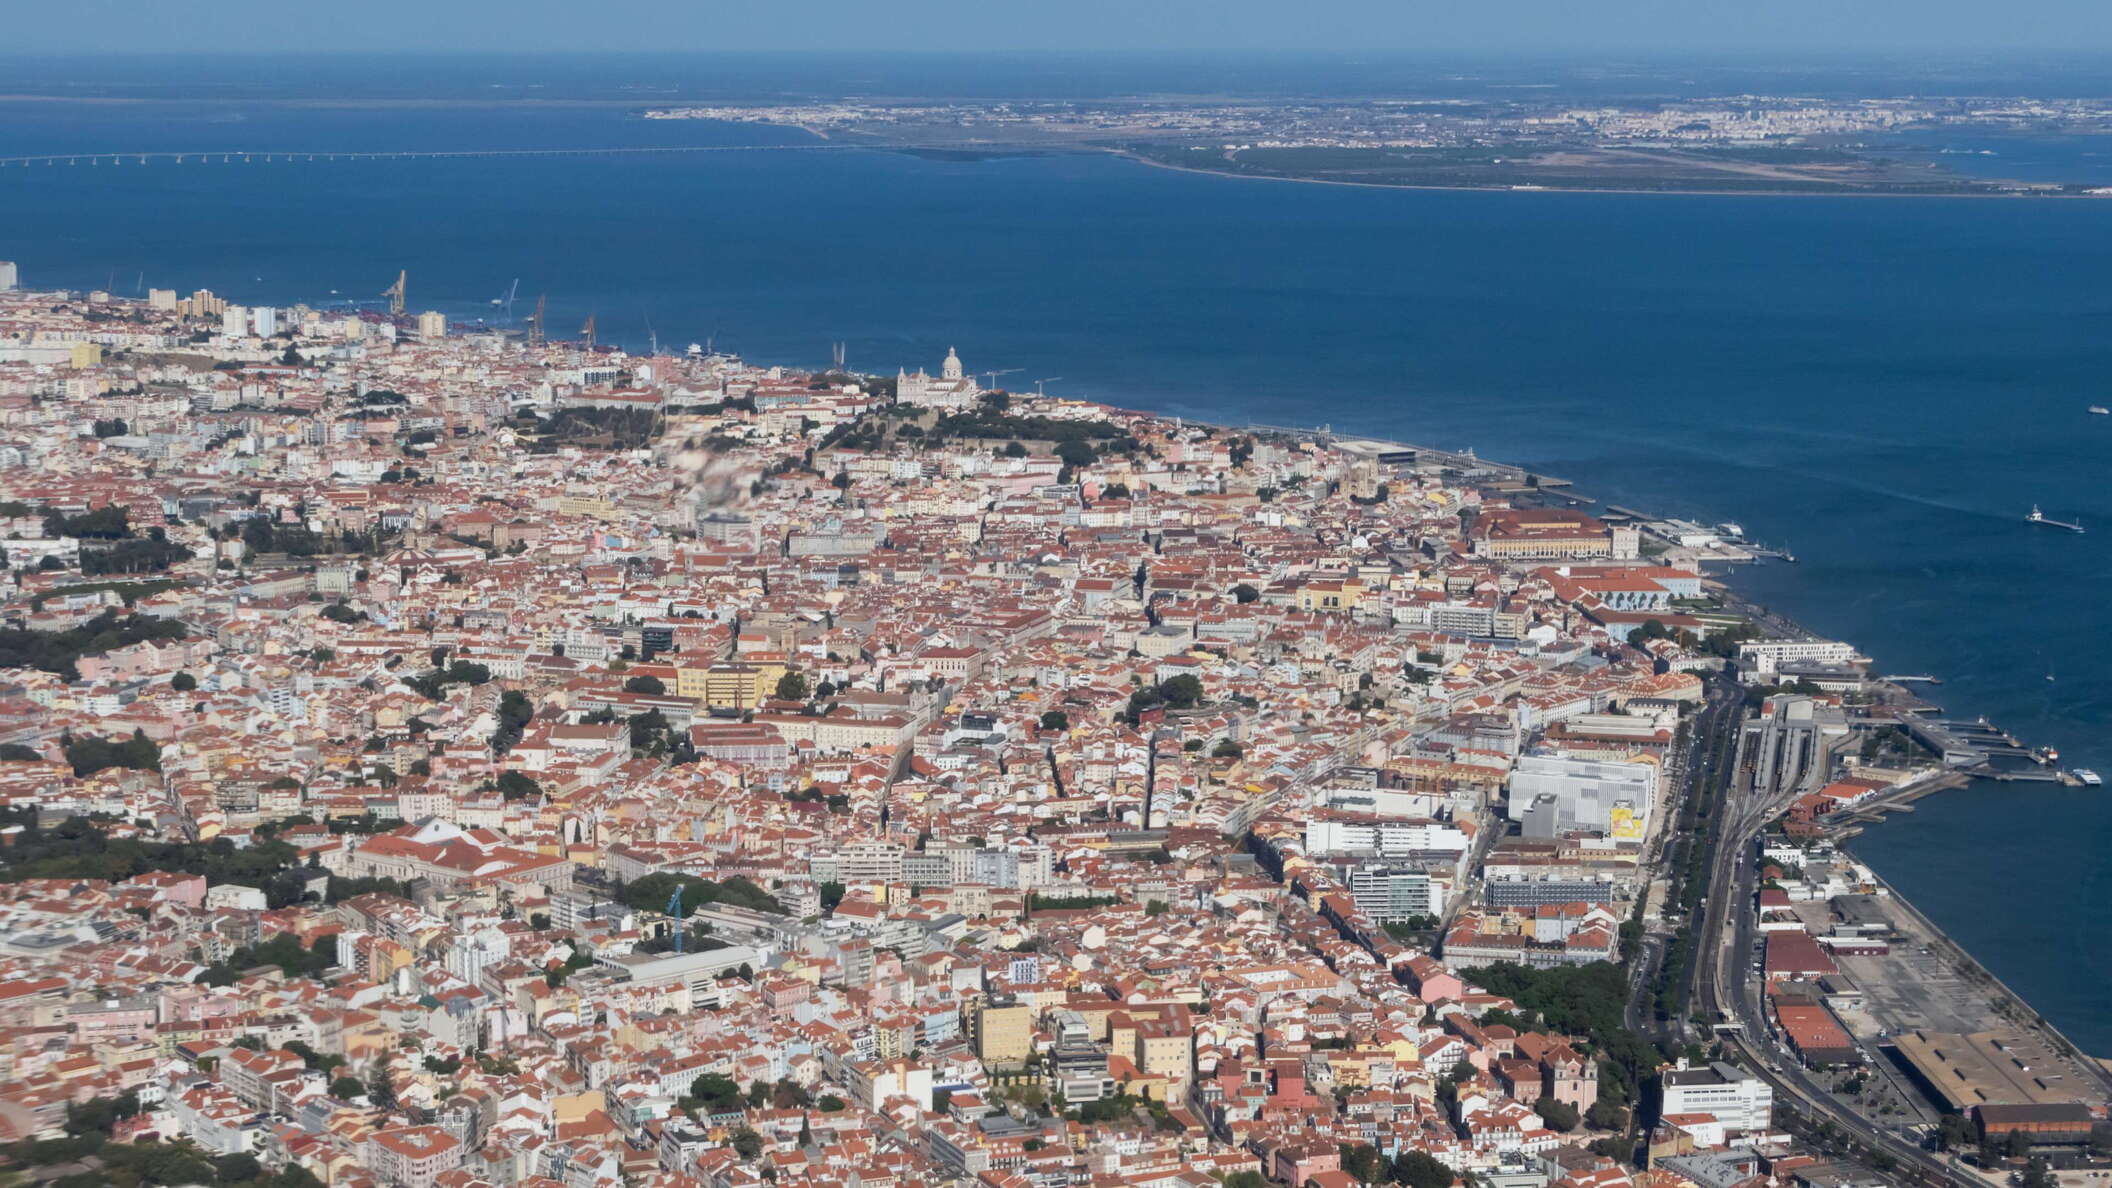 Lisboa | City centre with Rio Tejo